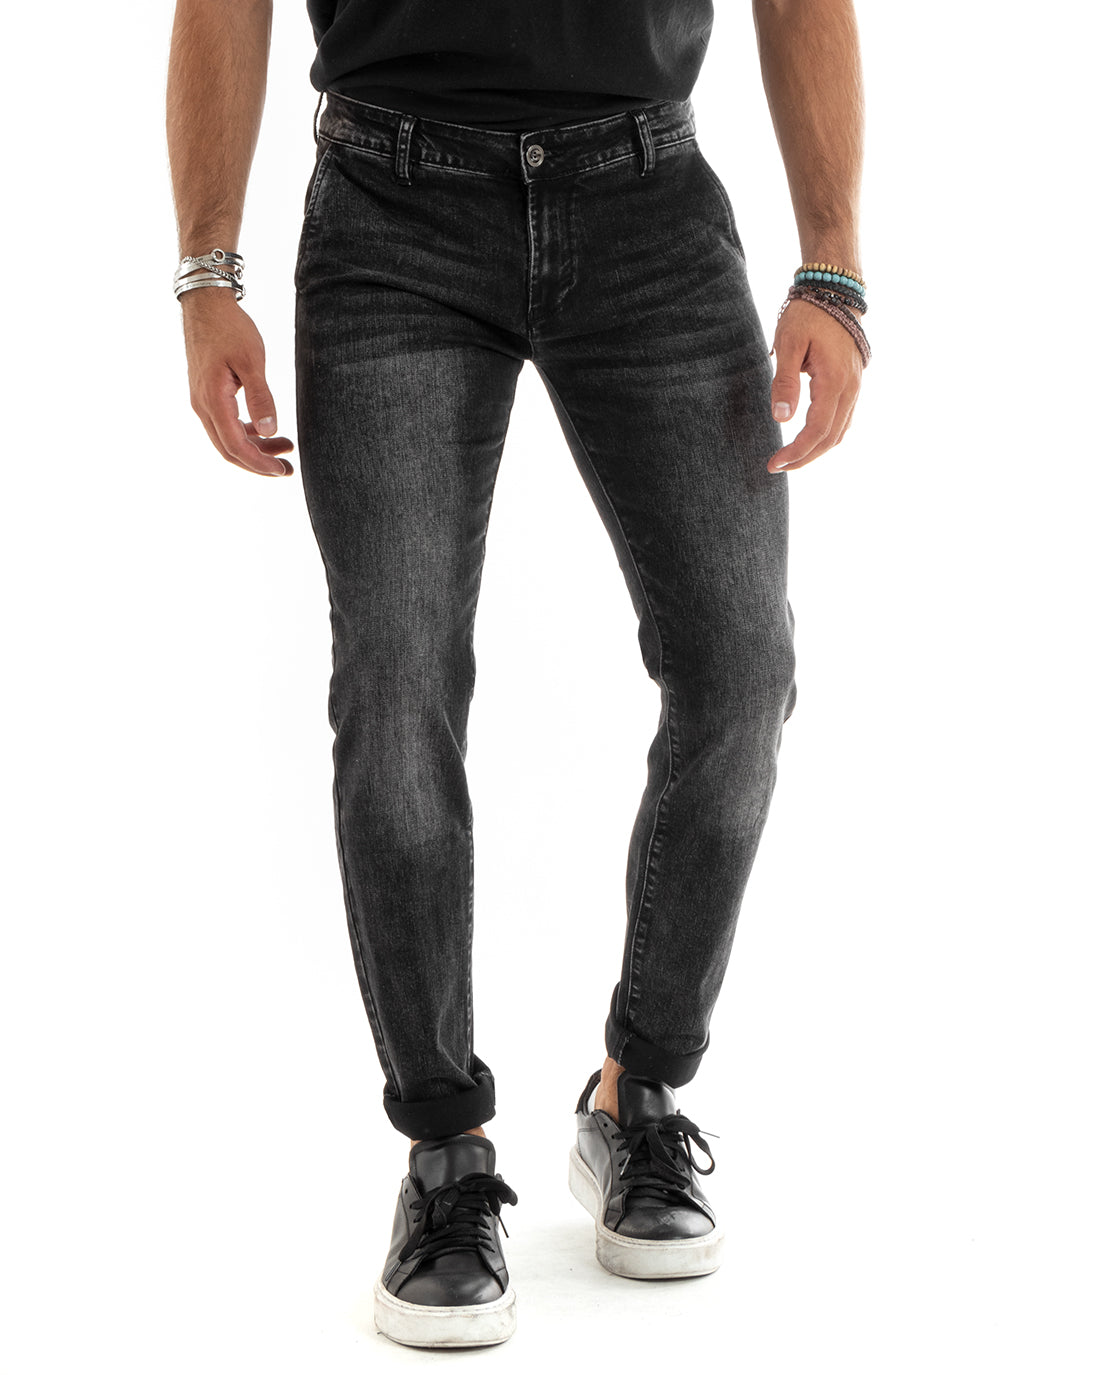 Pantaloni Uomo Jeans Tasca America Slim Fit Nero Denim Stone Washed GIOSAL-P5966A